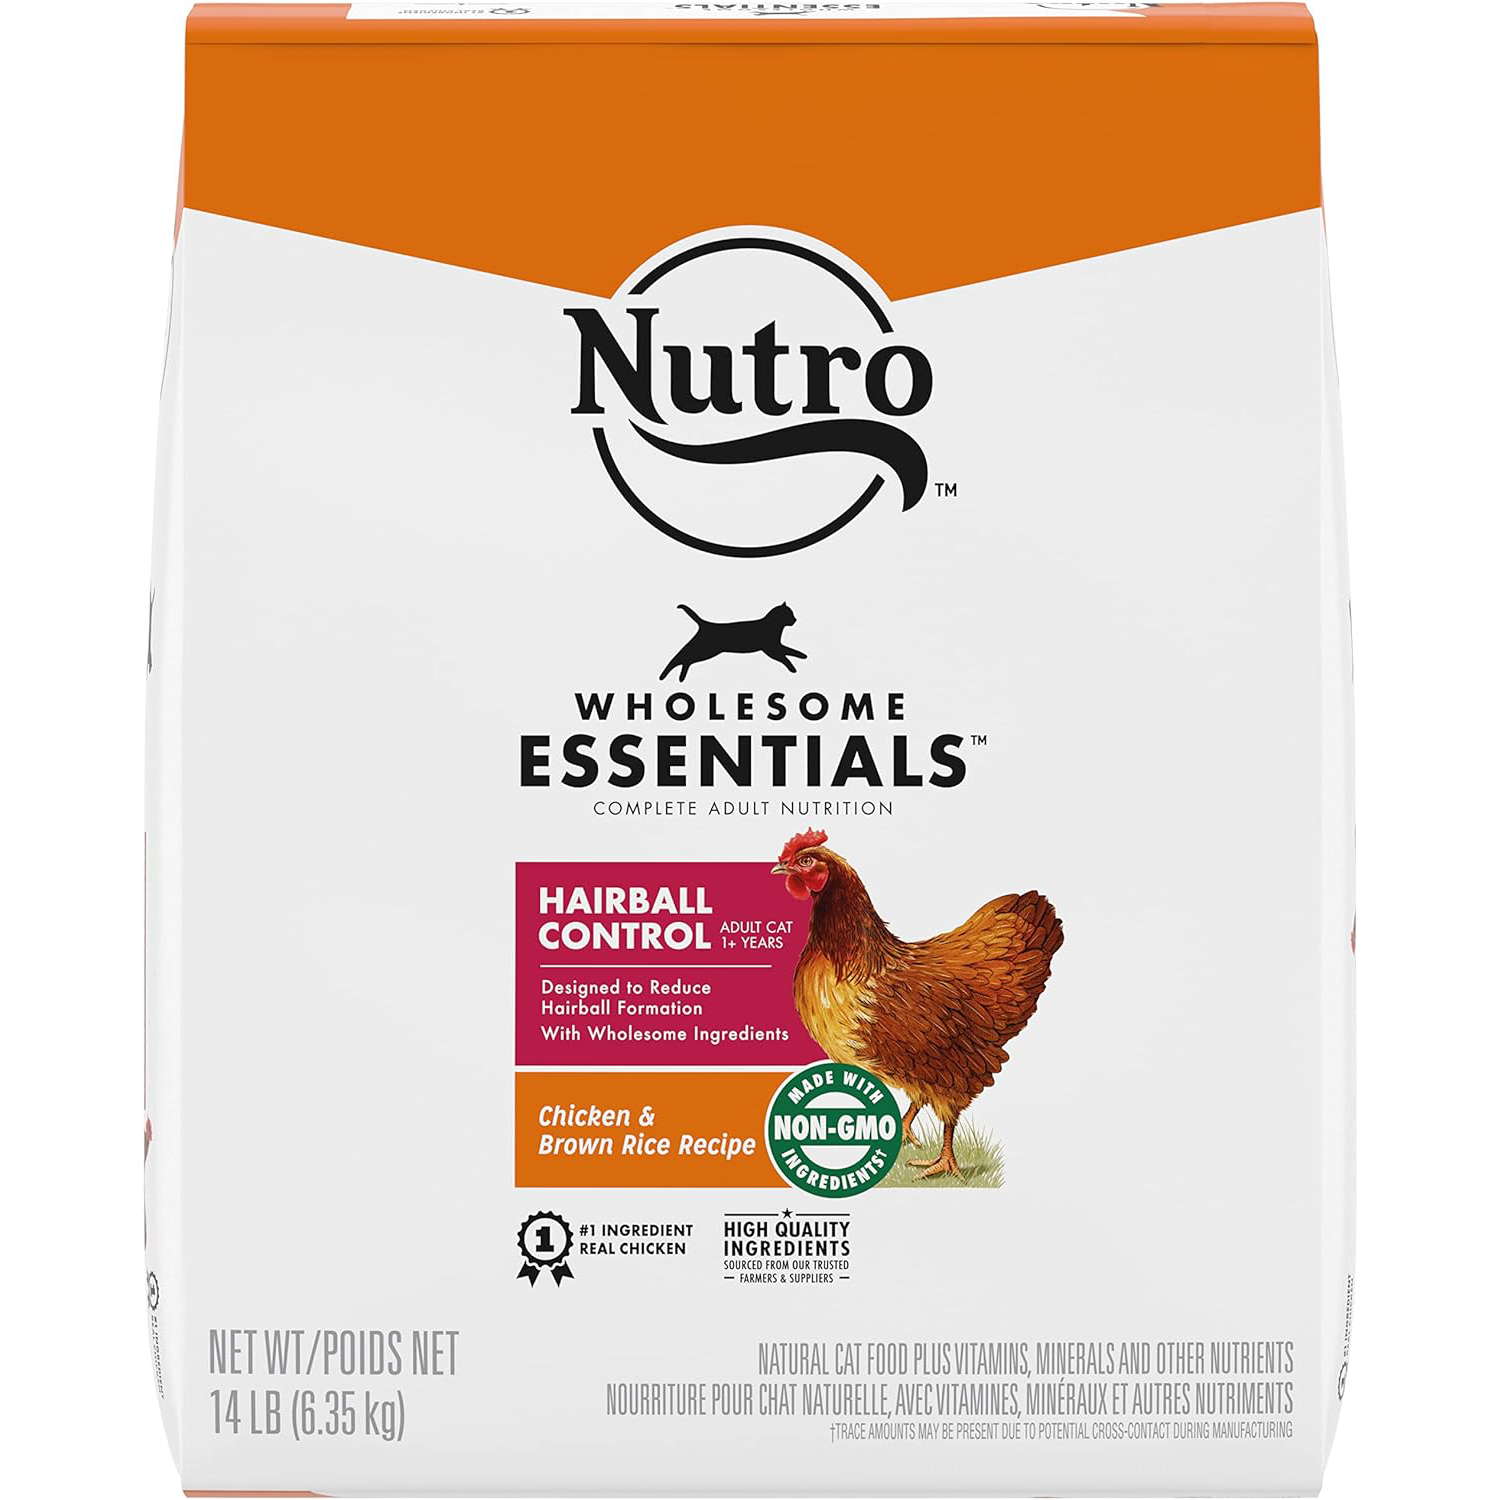 Nutro Hairball Control Dry Cat Food